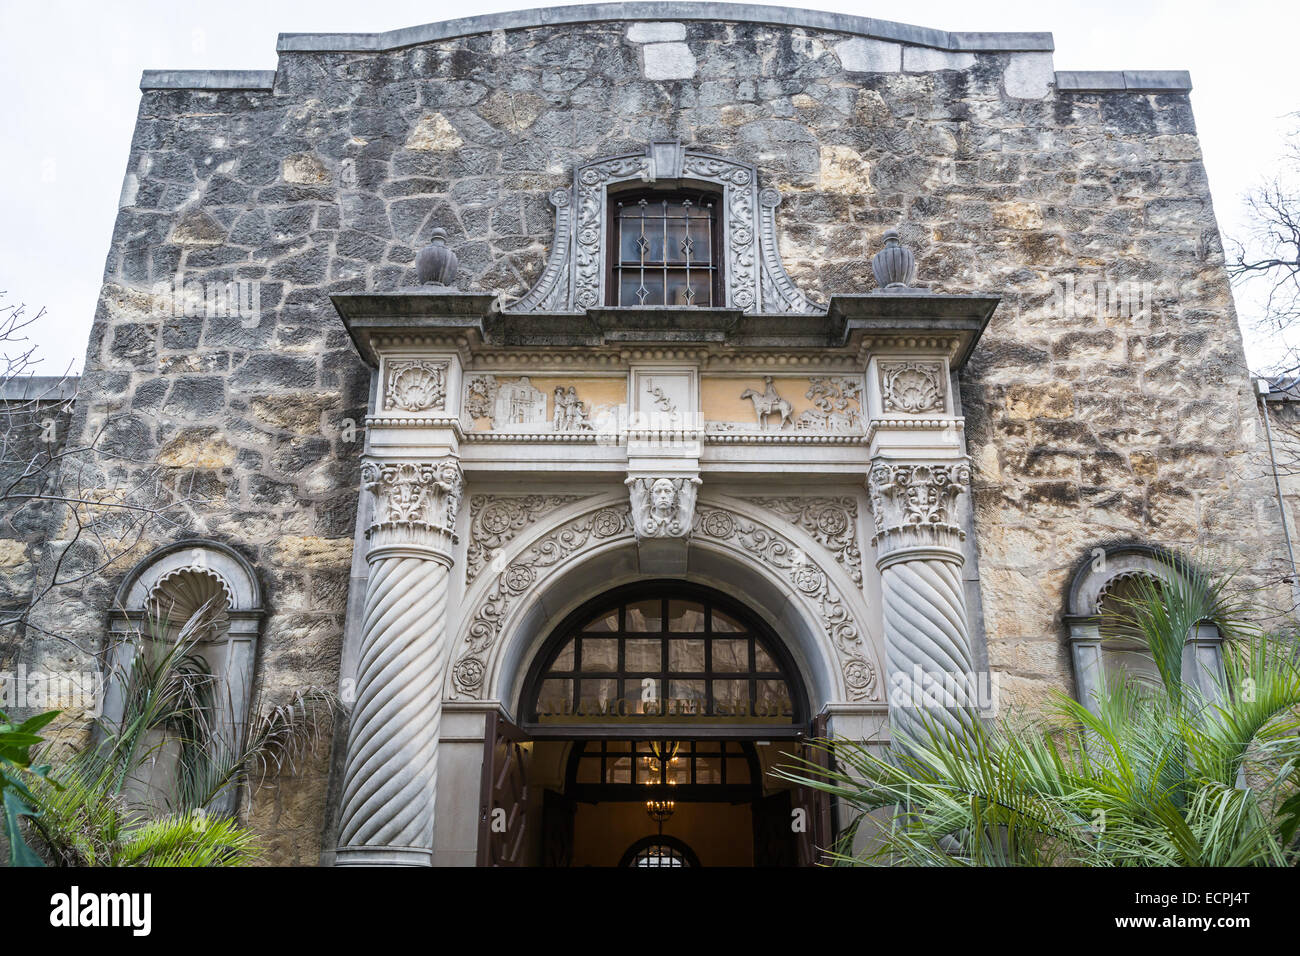 The Alamo architecture and walls in San Antonio, Texas, USA. Stock Photo